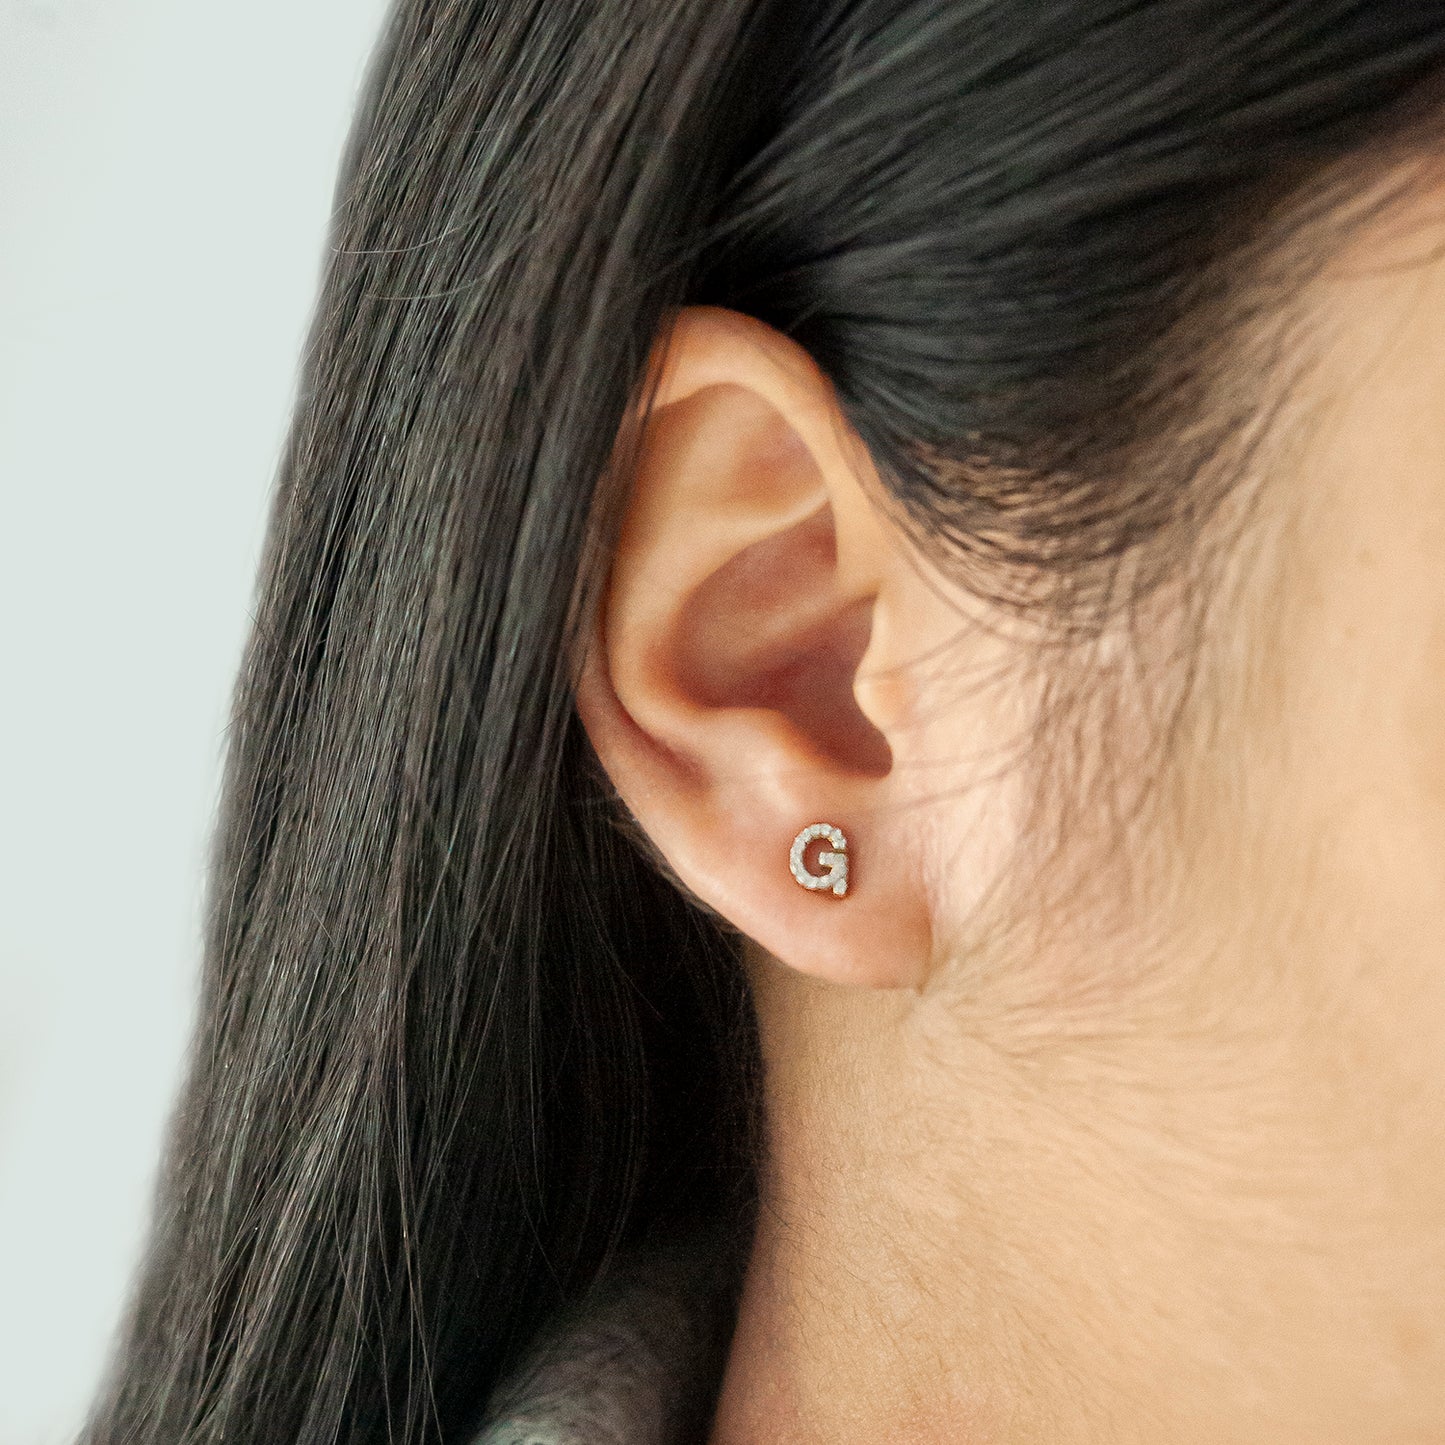 Single Initial Diamond Stud - G for Ear